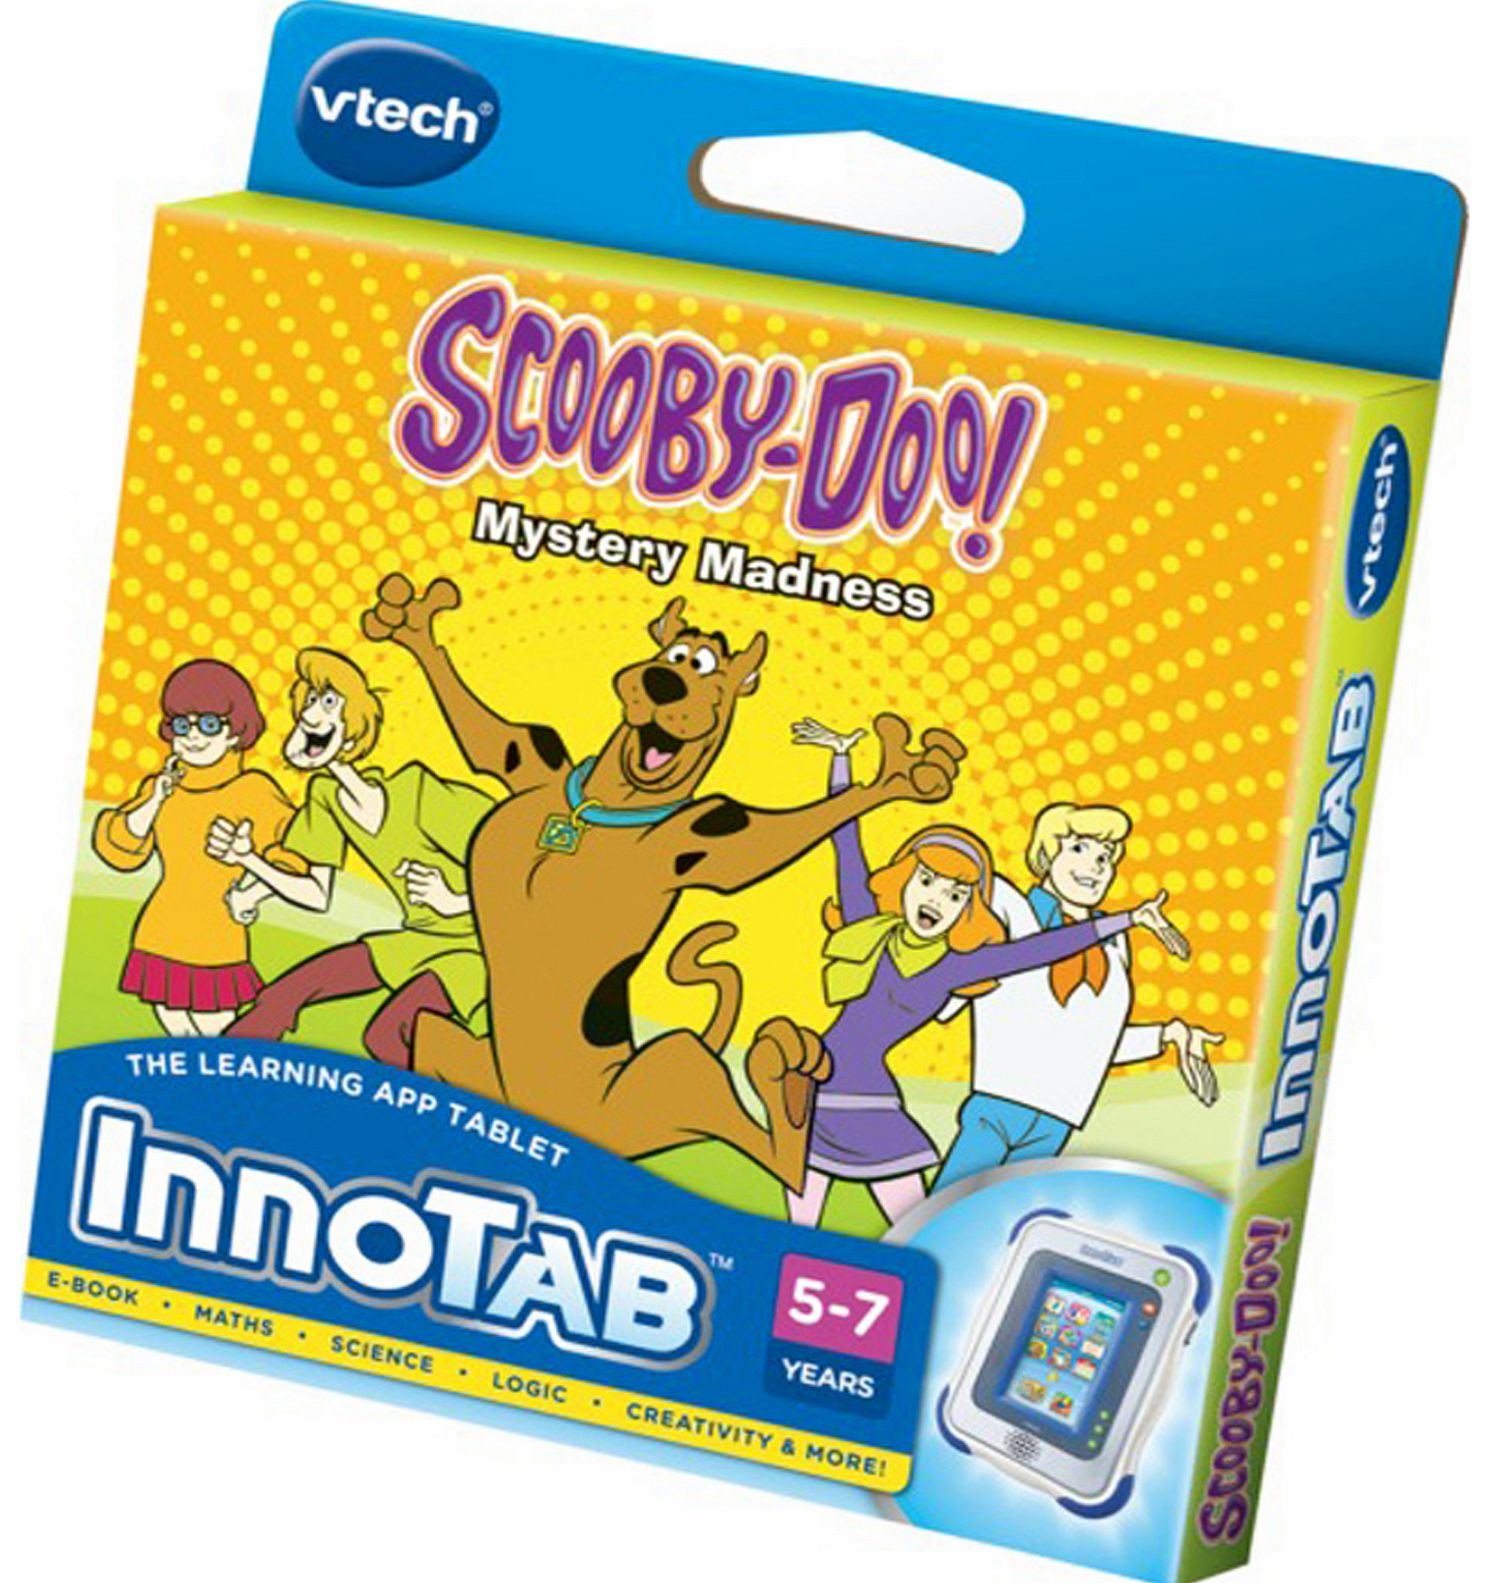 Vtech InnoTab Scooby Doo